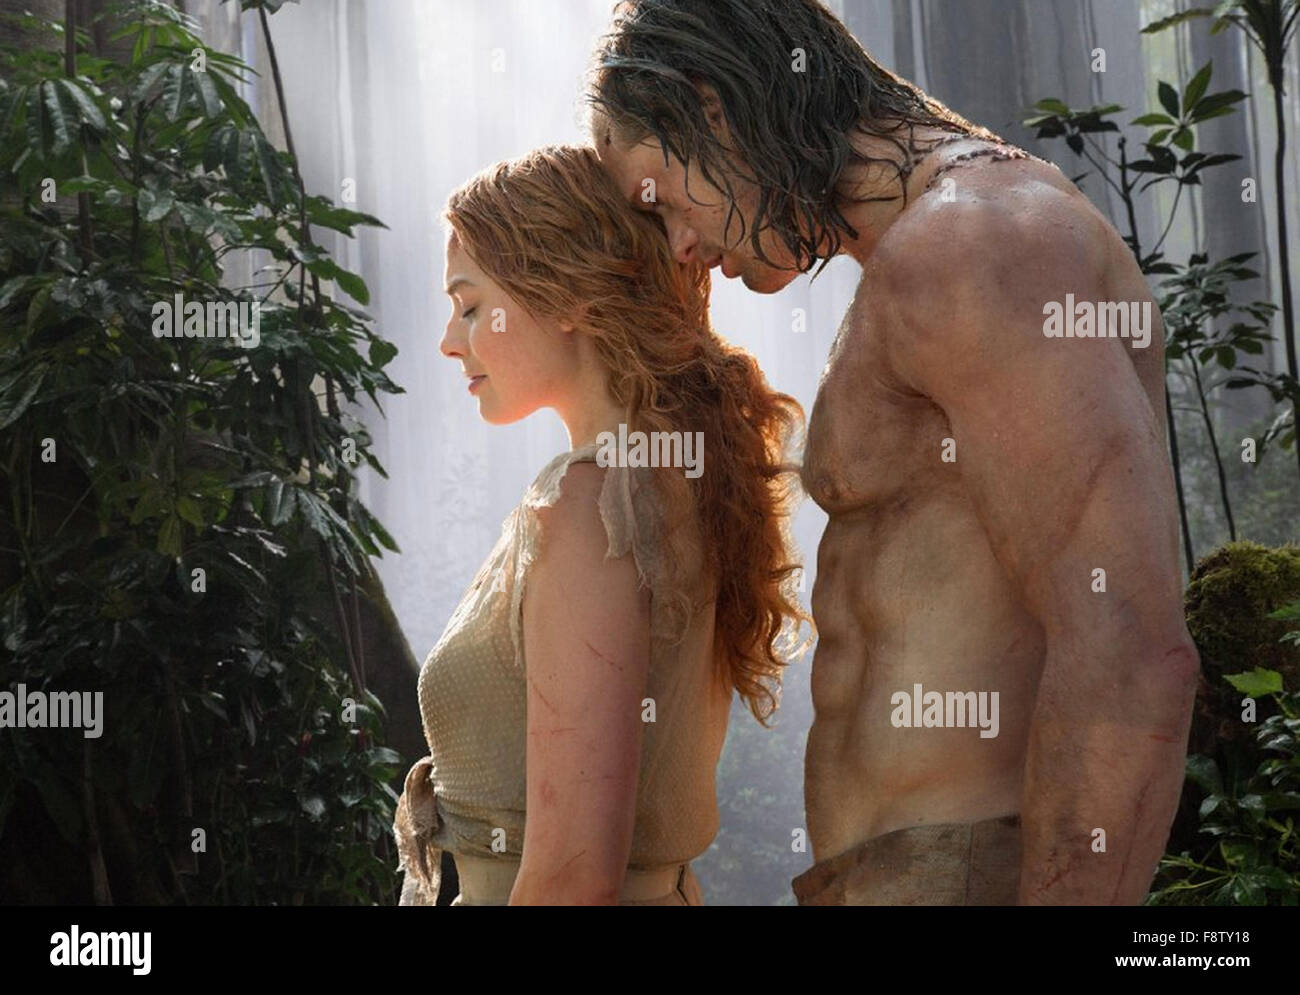 La légende de Tarzan 2016 Warner Bros film avec Margot Robbie et Alexander Skarsgard Banque D'Images